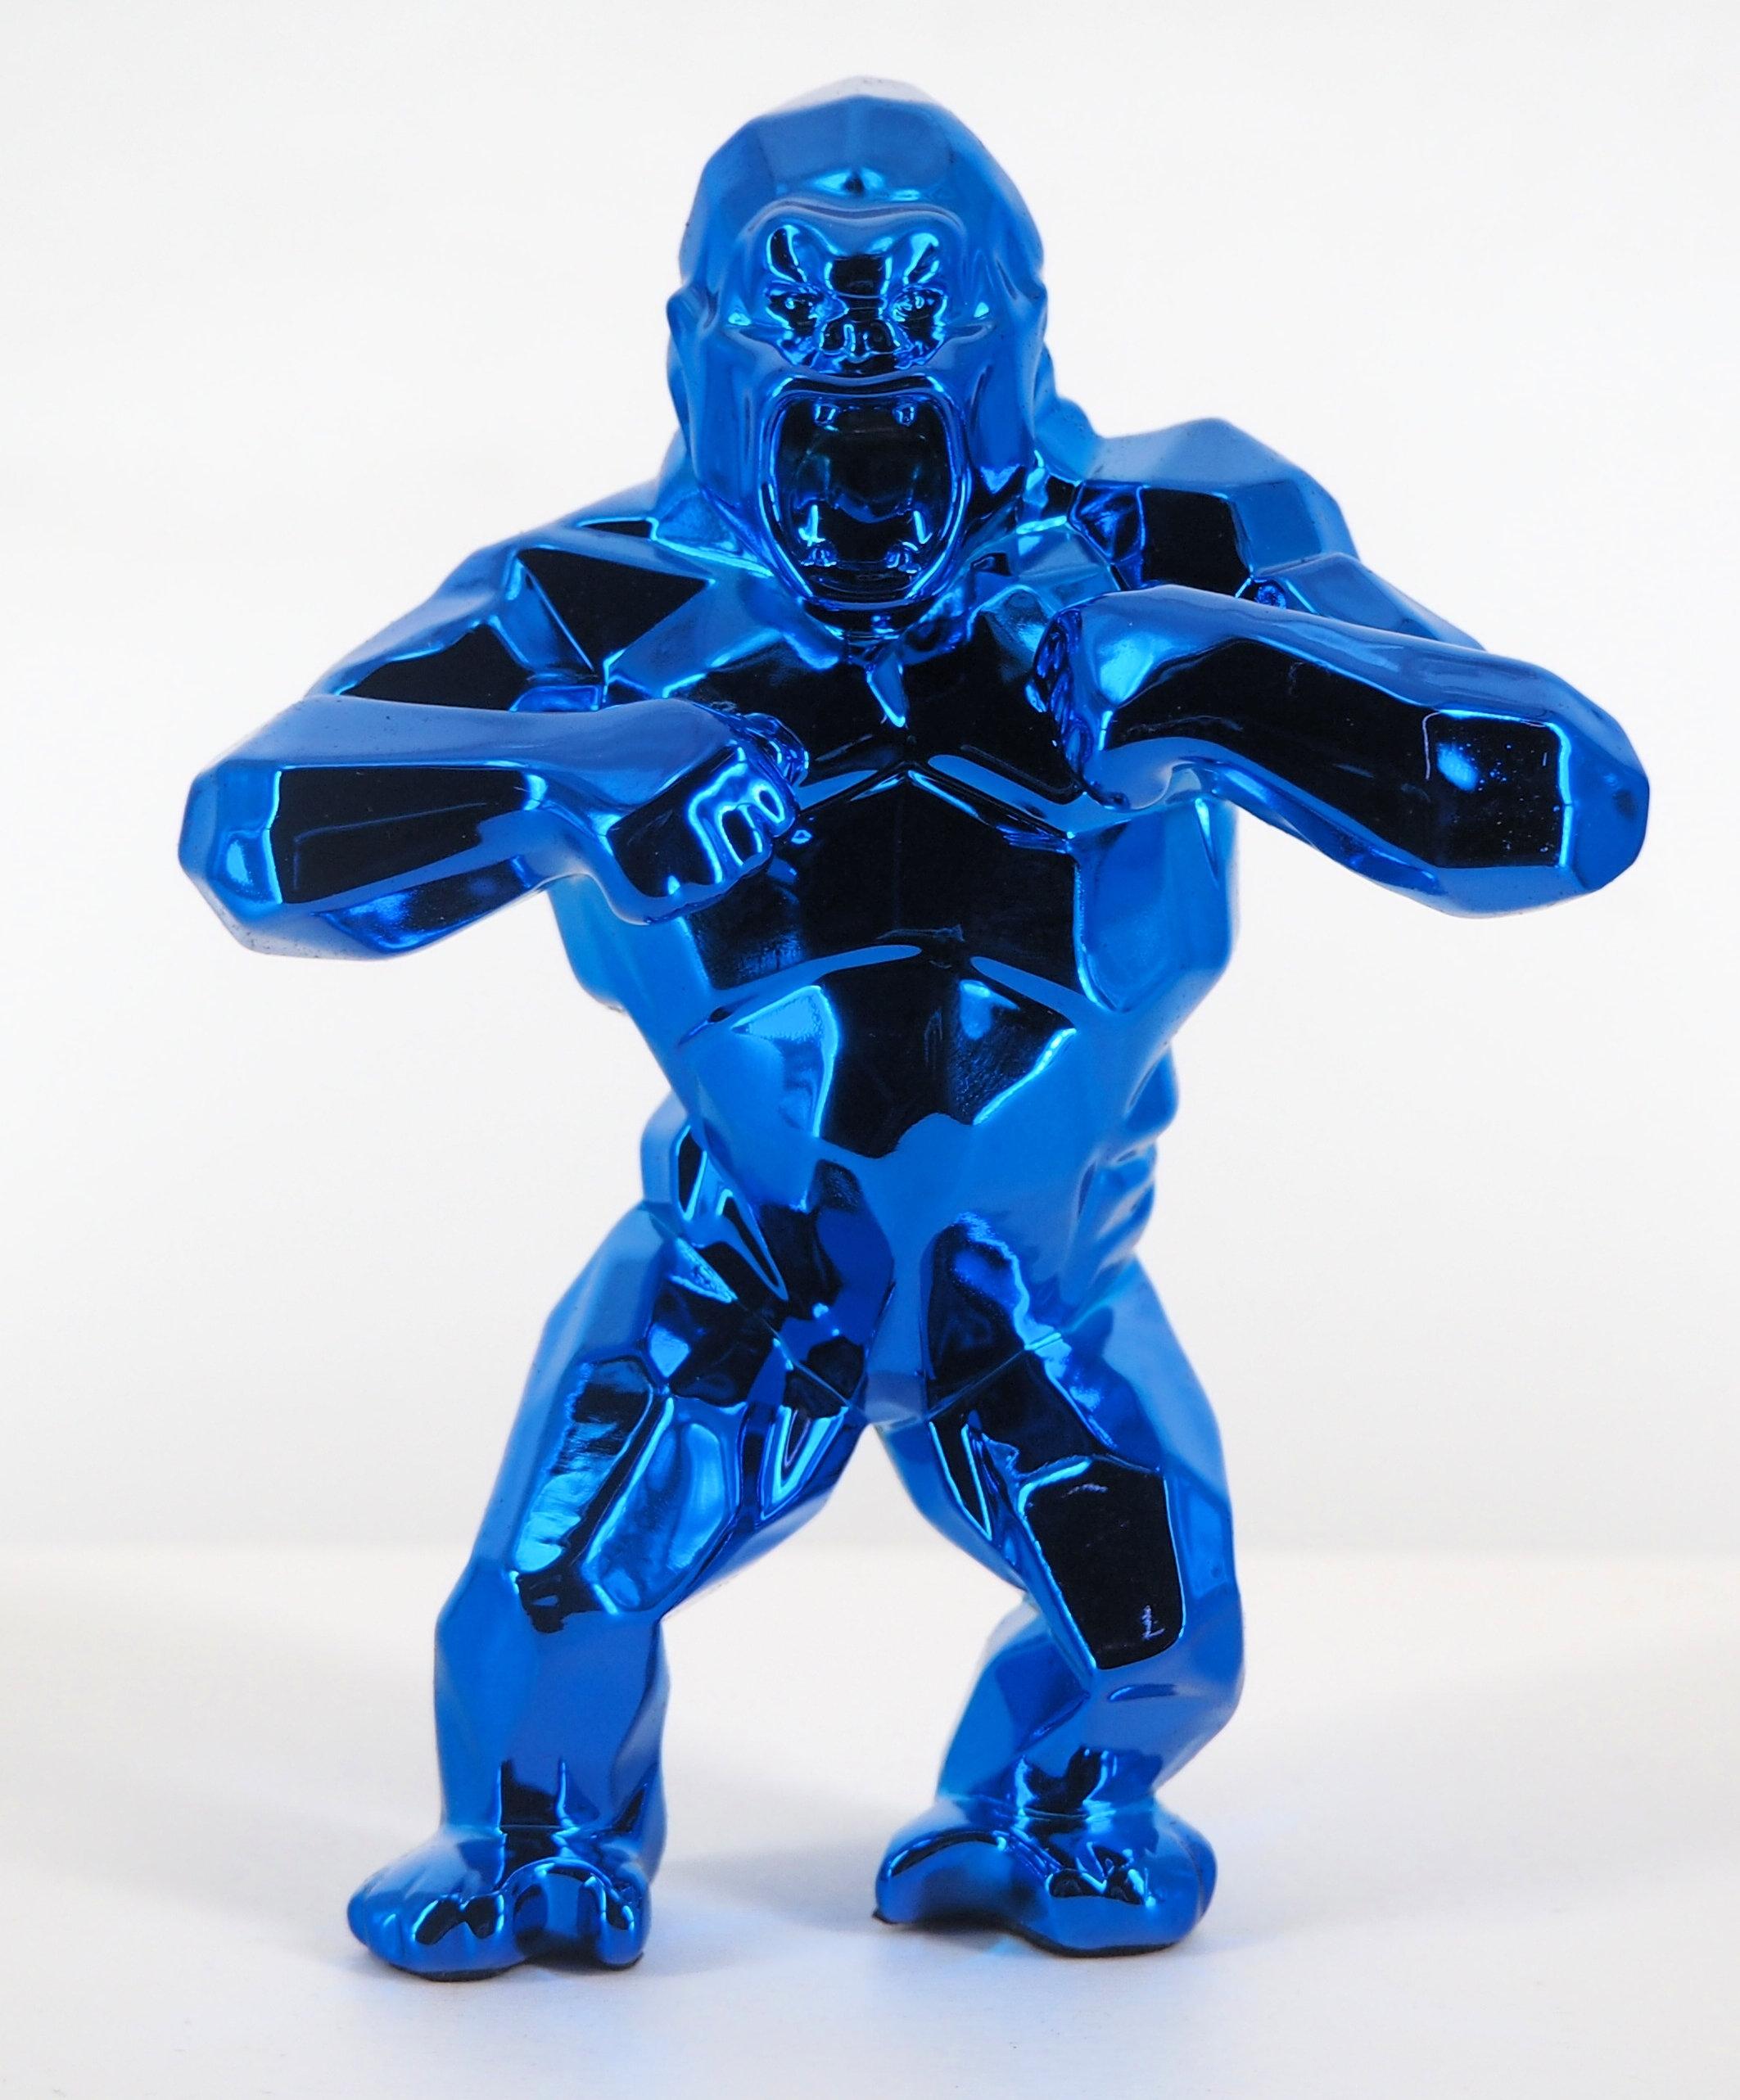 Kong Spirit (édition bleue) - Sculpture dans sa boîte d'origine avec certificat d'artiste